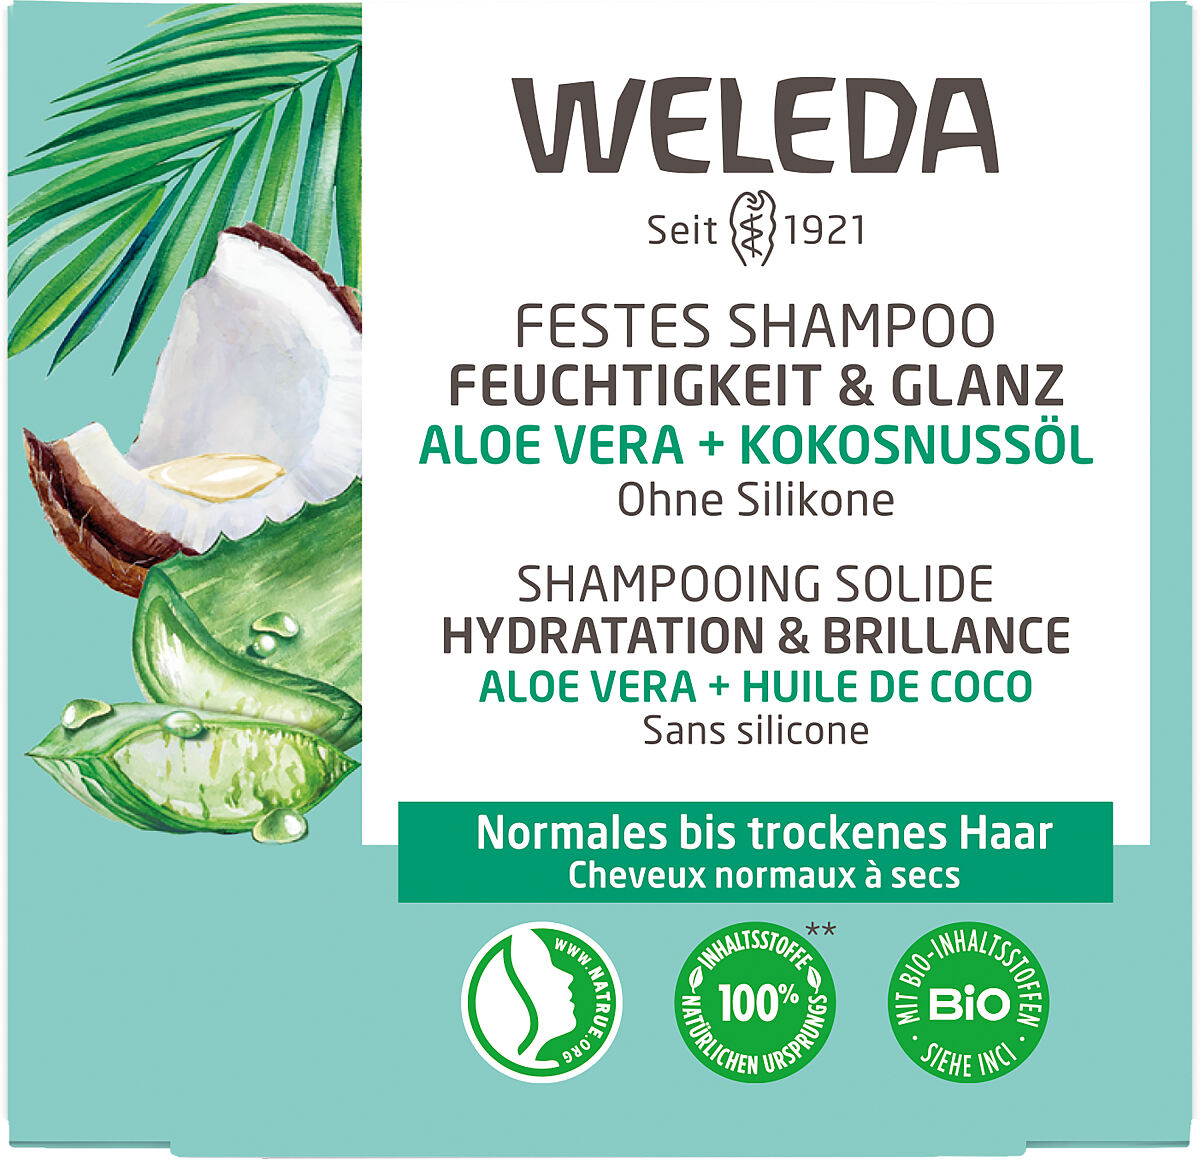 WELEDA_Festes Shampoo_Feuchtigkeit & Glanz_50 g_UVP € 5,95